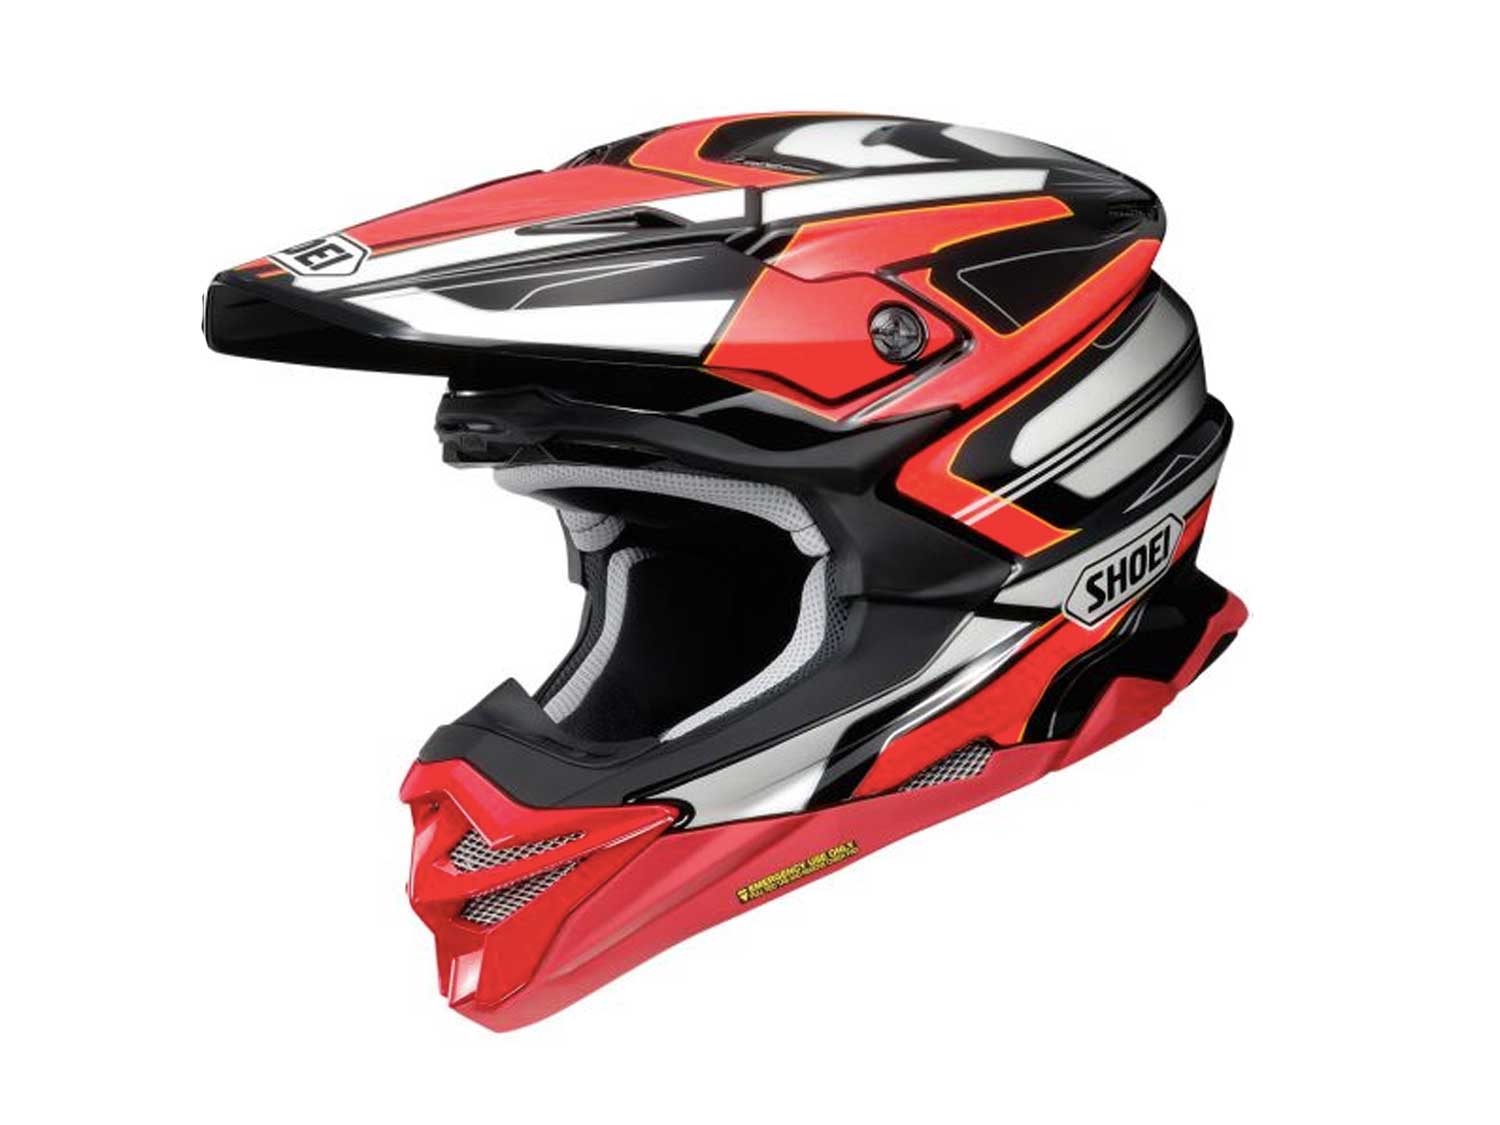 2021 AFX FX-17 Camo MX Motocross Offroad ATV Dirt Bike Helmet Pick Size